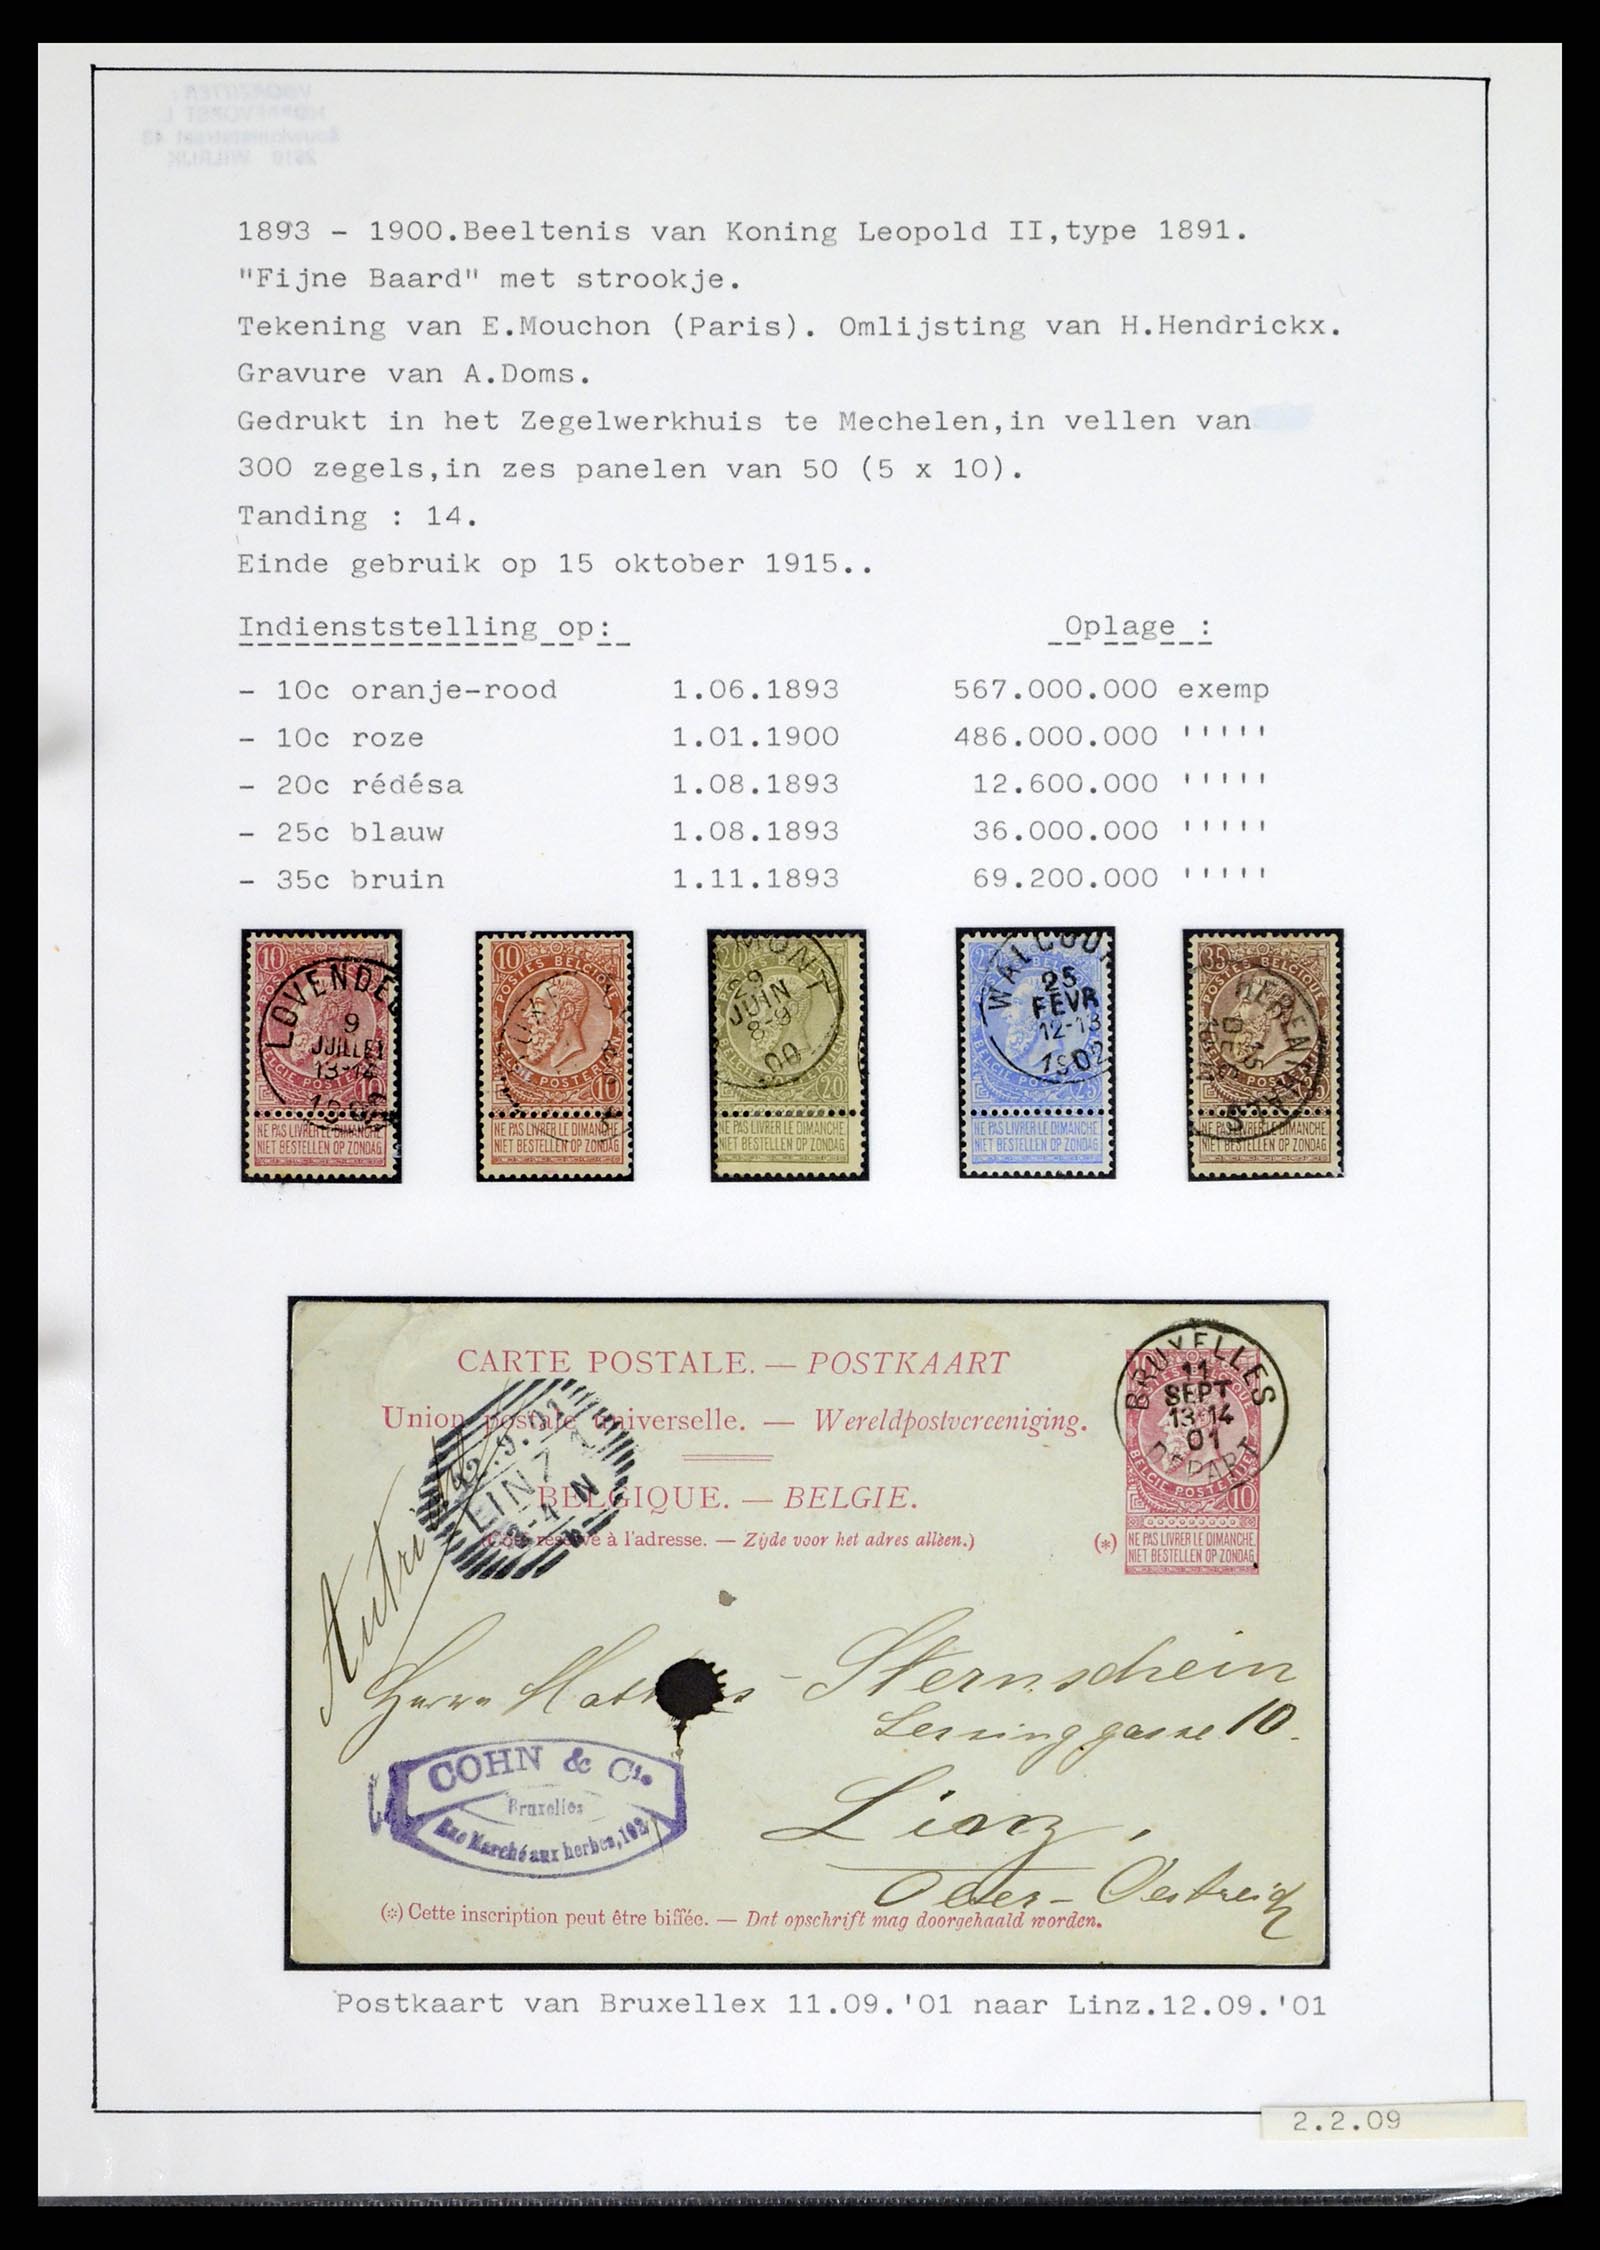 38033 0024 - Stamp collection 38033 Belgiùm classic 1849-1905.